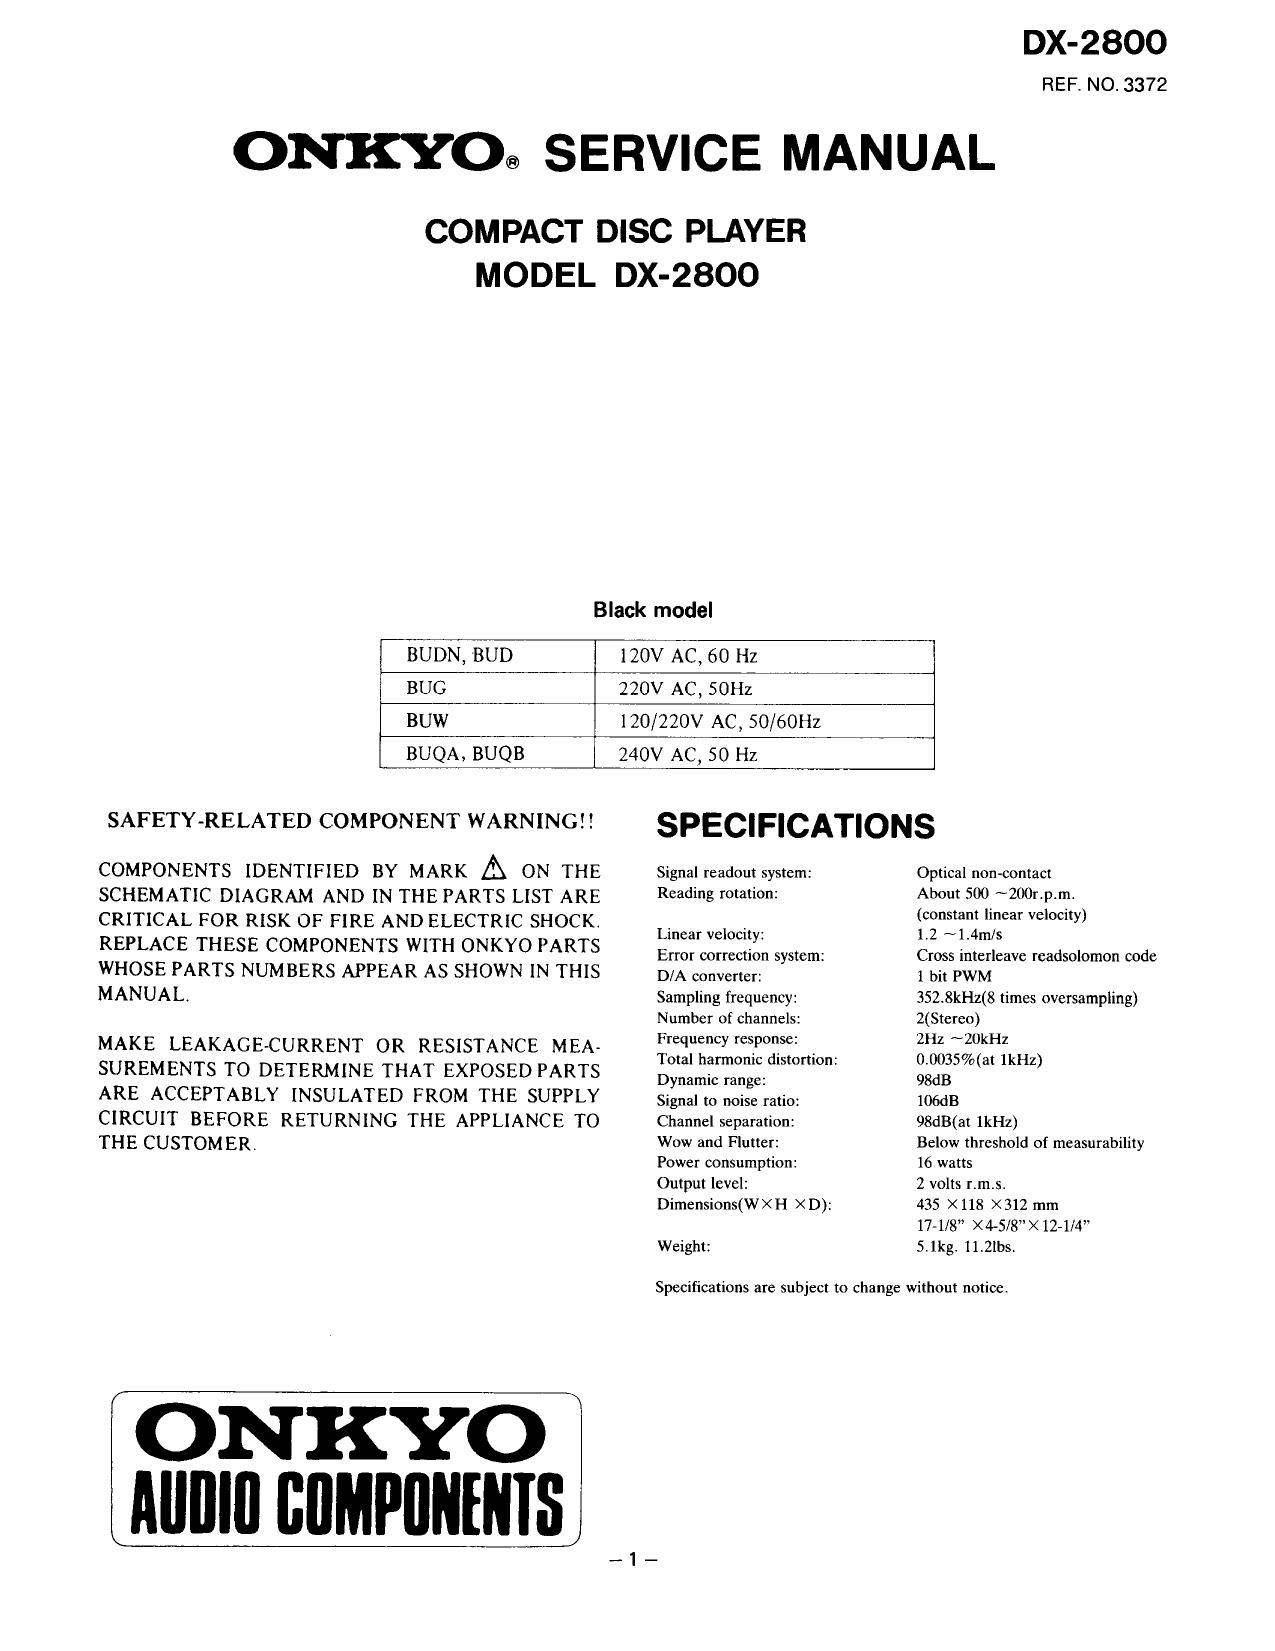 Onkyo DX-2800